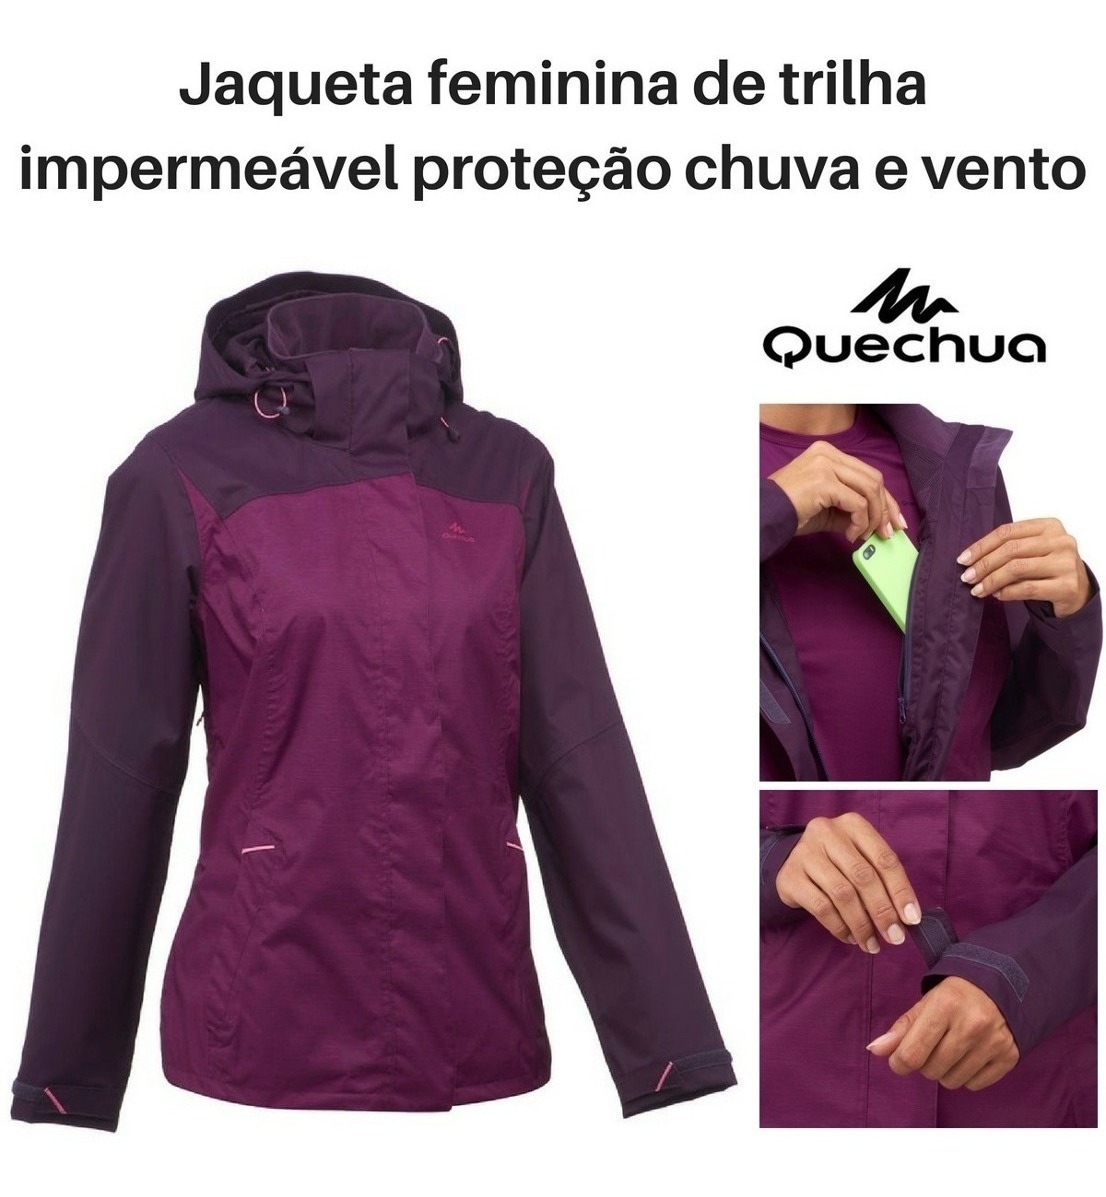 jaqueta feminina trilha